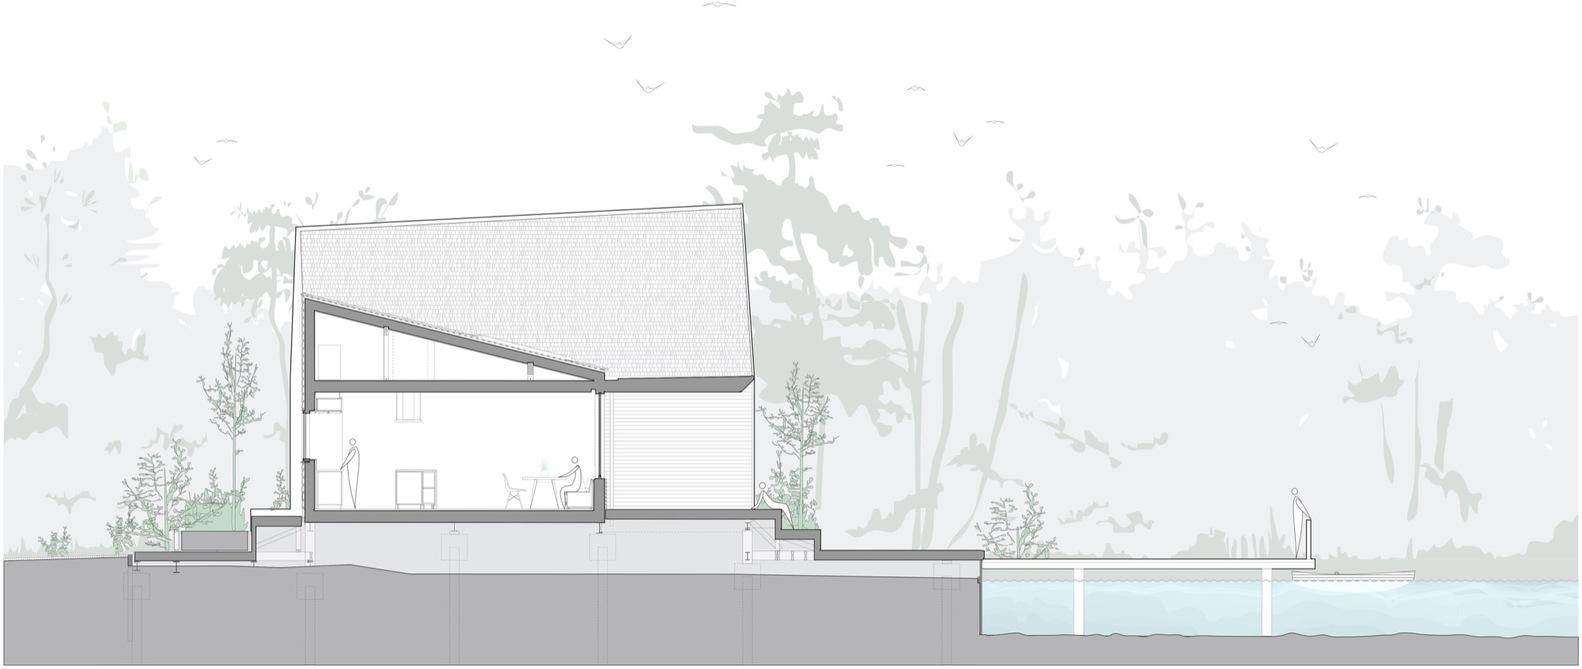 池塘小宅 Backwater丨Platform 5 Architects